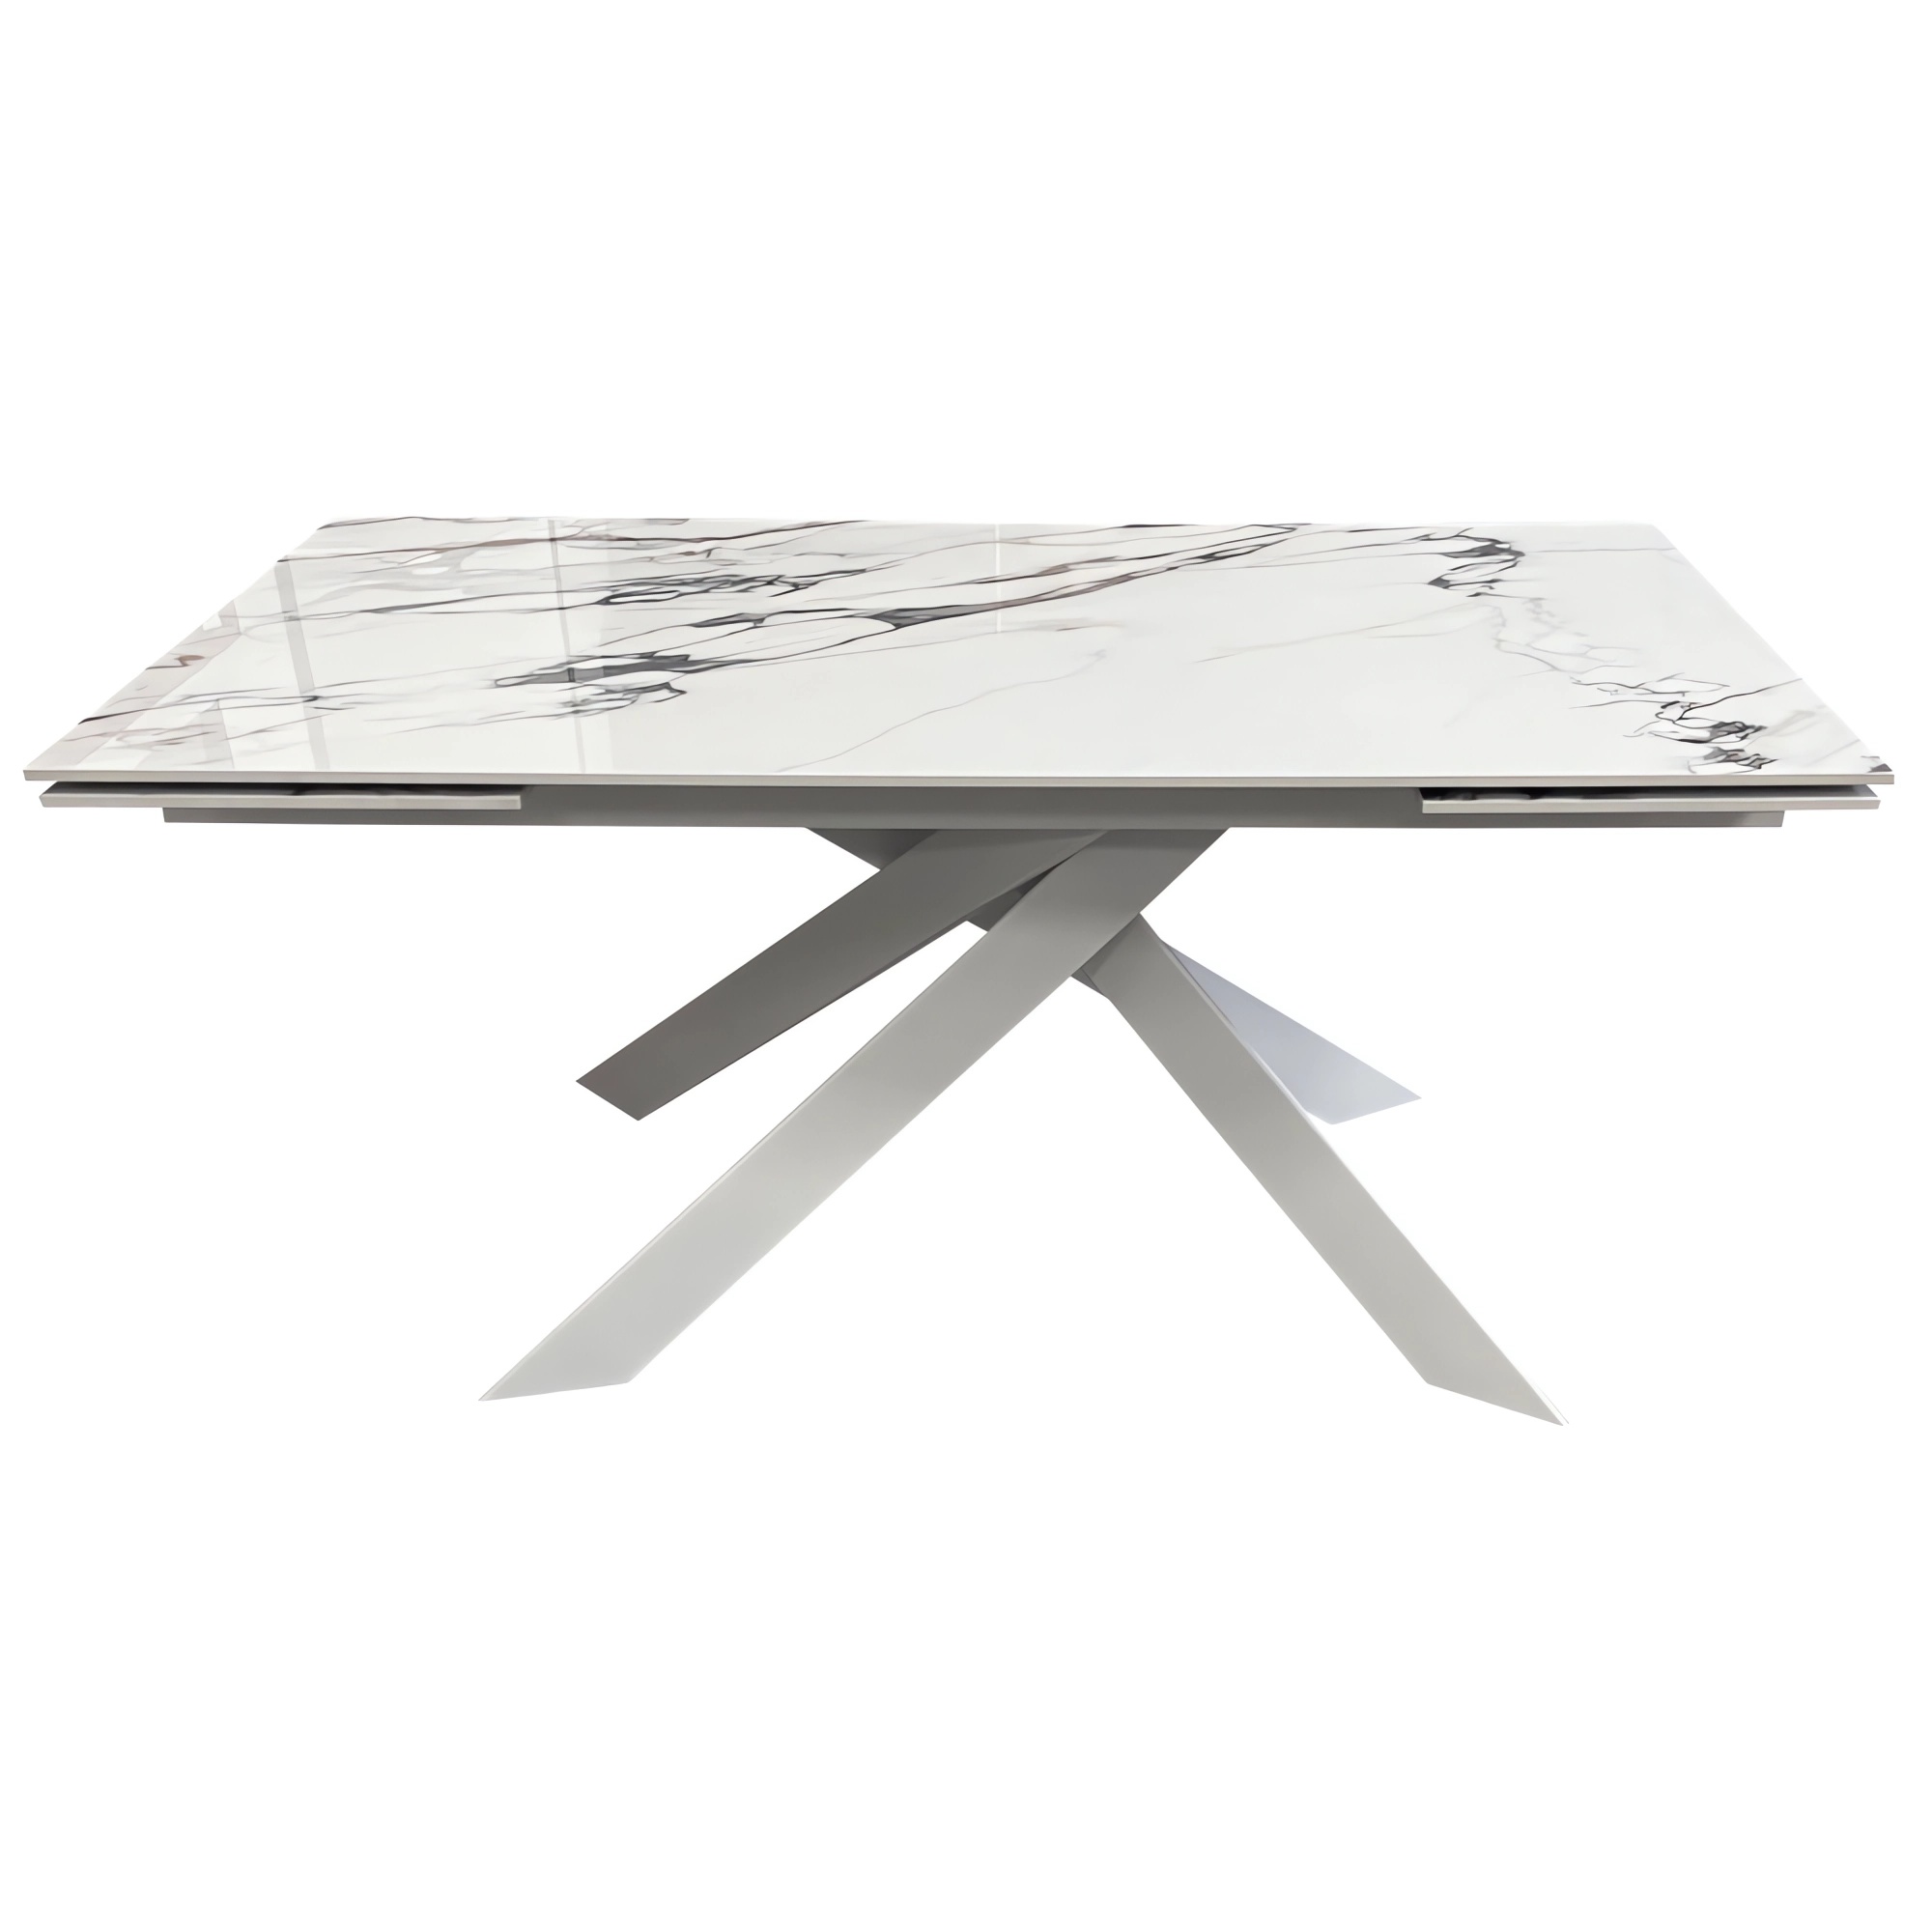 Gracio Sofia Gold стол раскладной керамика 160-240 см Concepto